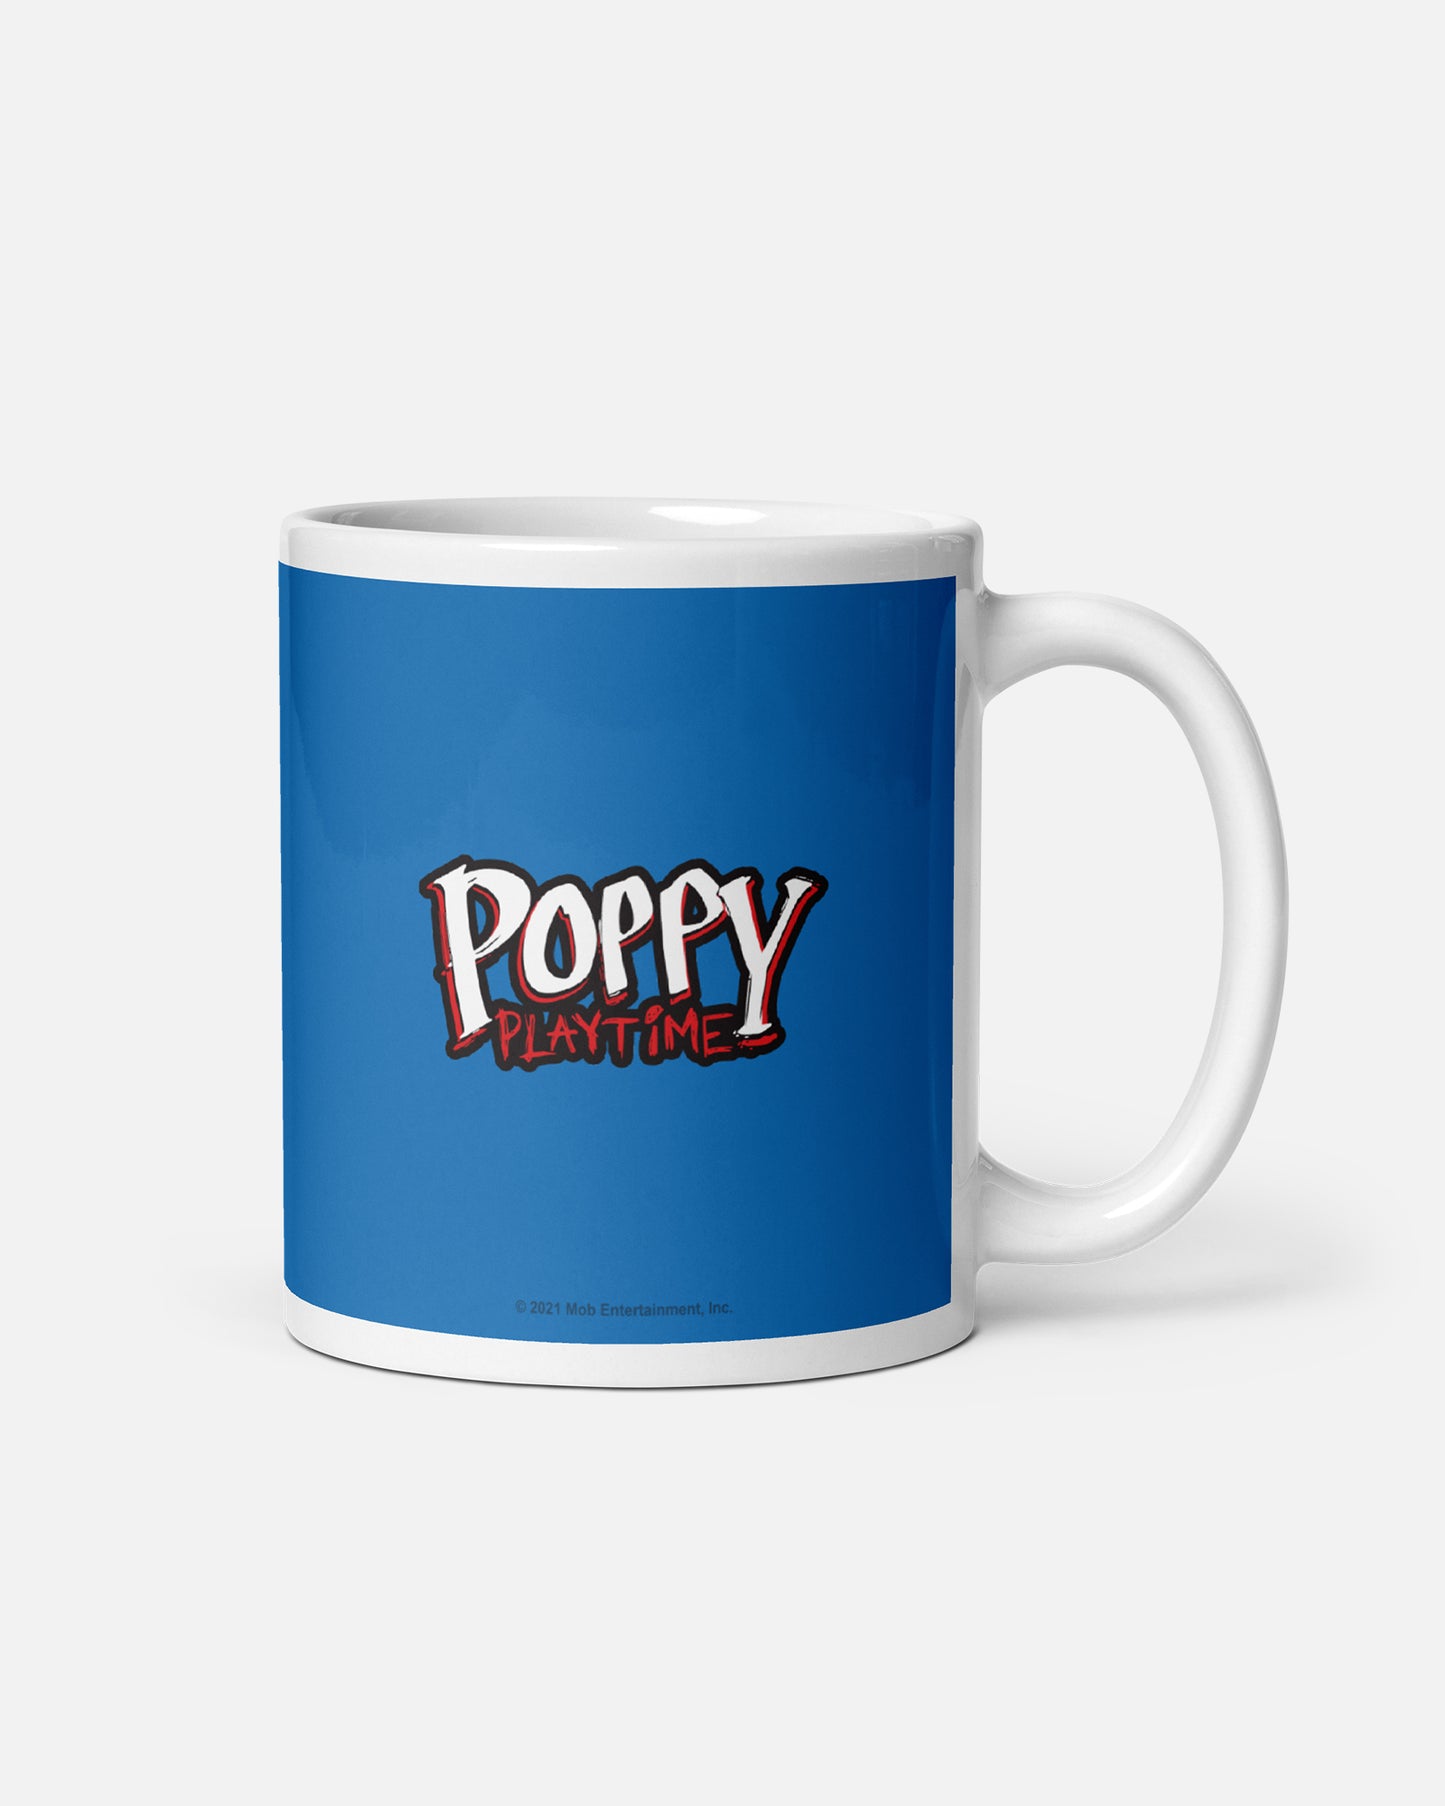 huggy wuggy mug. text: poppy playtime